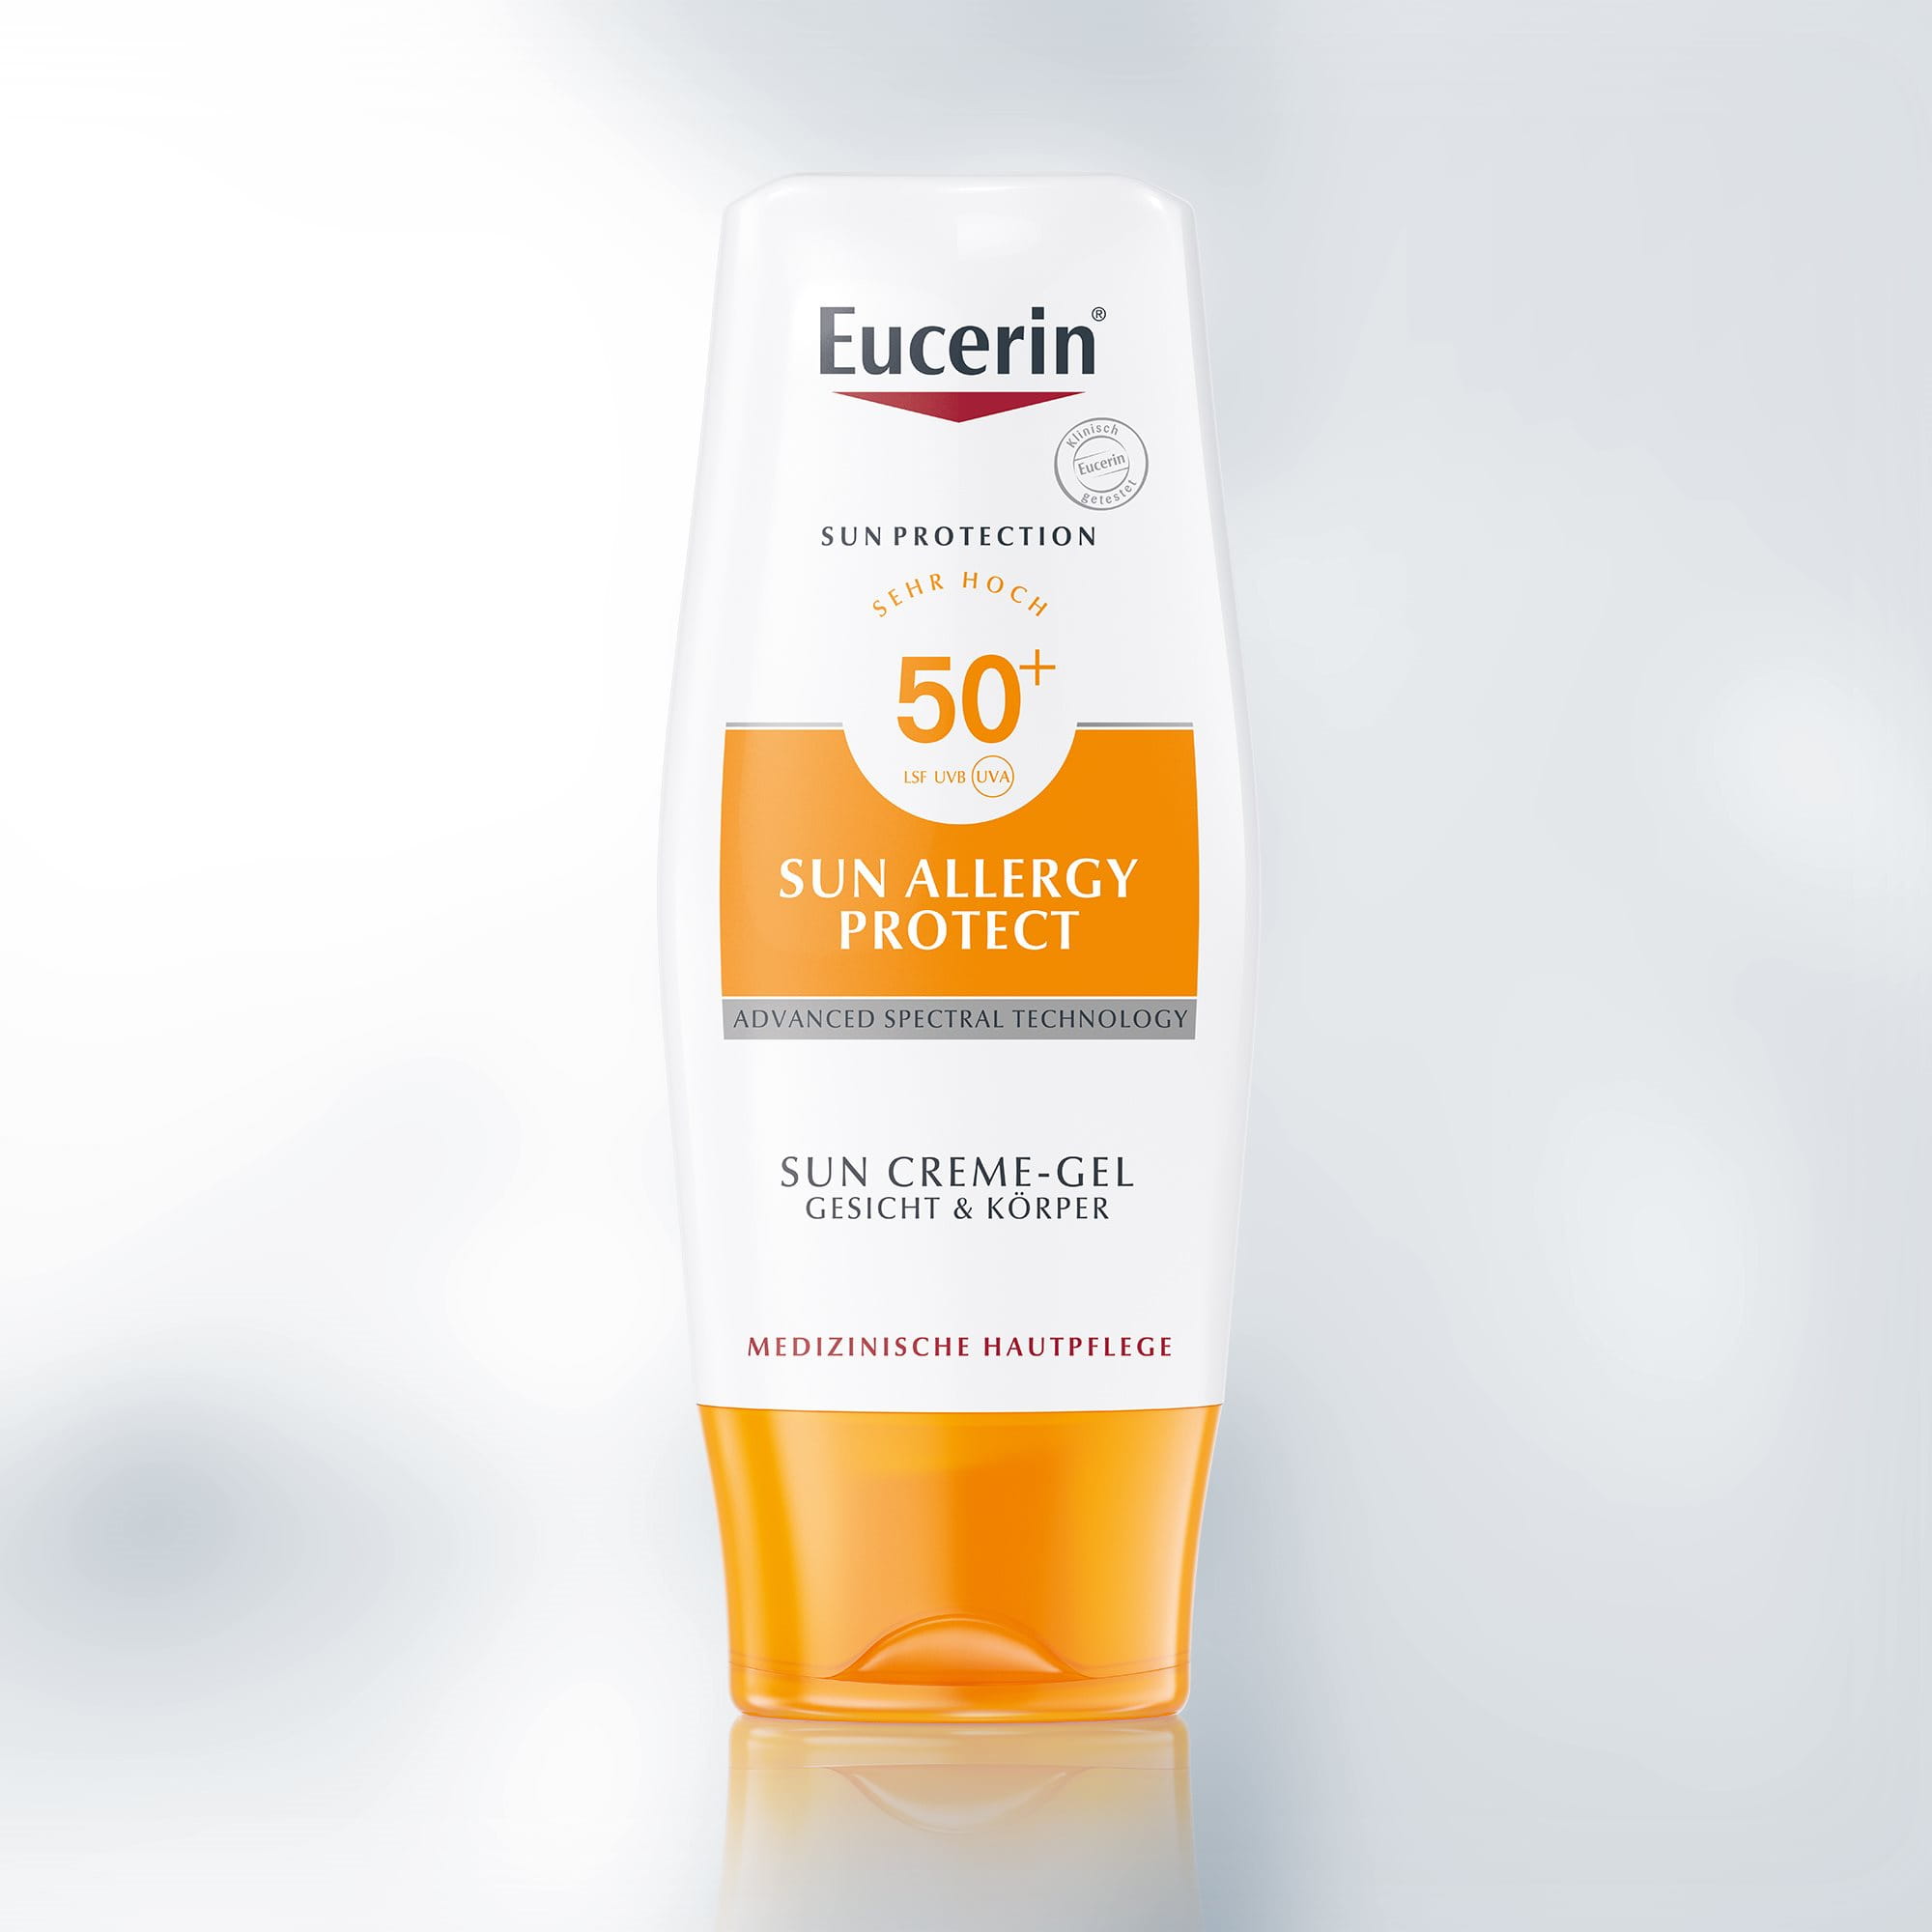 Eucerin Sun Allergy Protect Sun Gel-Creme LSF 50+